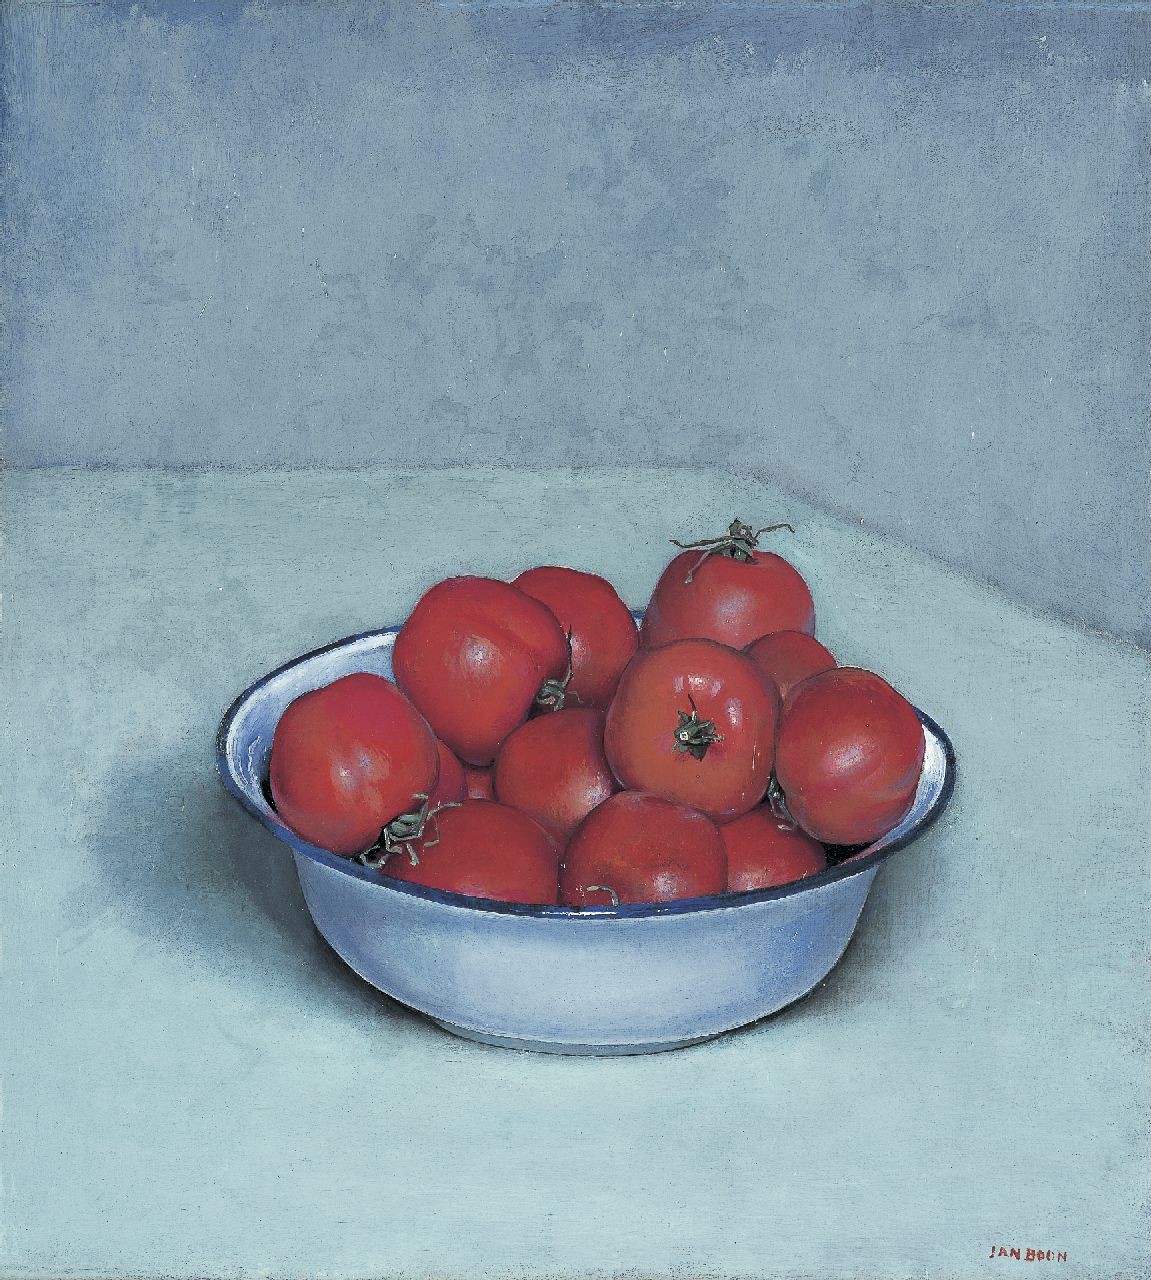 Boon J.  | Jan Boon, Tomatoes in a enamel bowl, Öl auf Leinwand 41,1 x 37,3 cm, signed l.r.